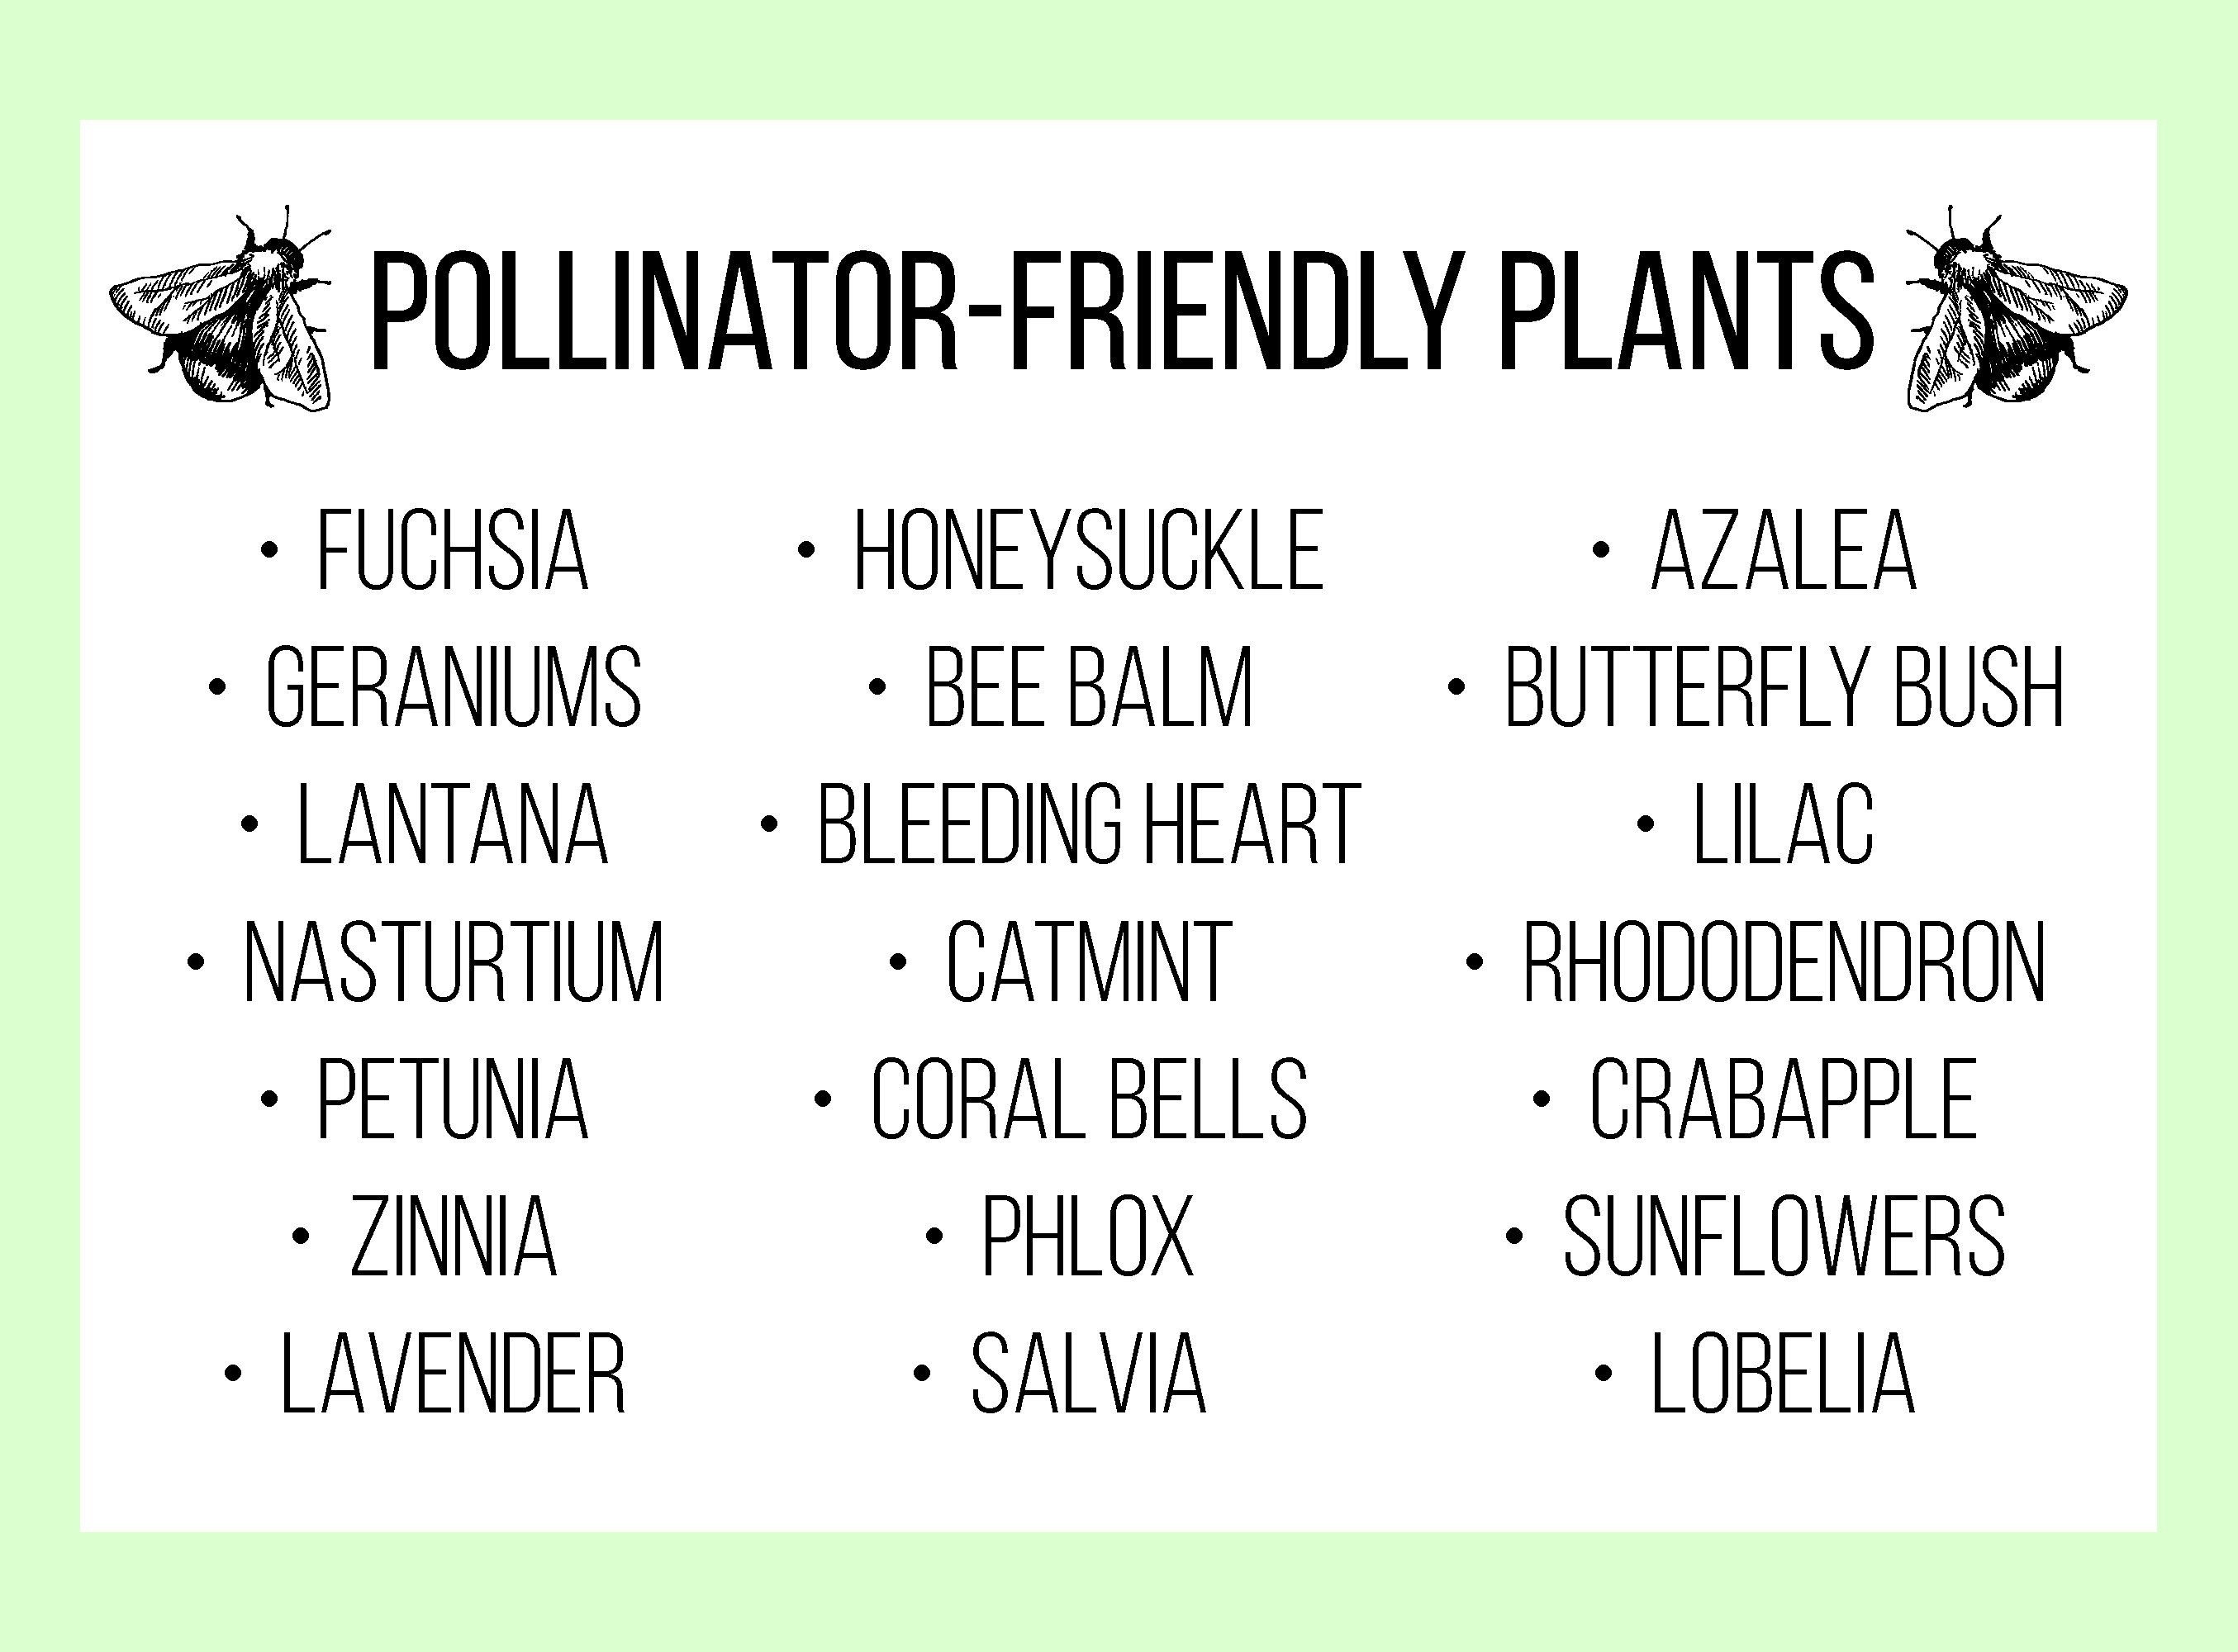 Plants for Pollinators: fuchsia, geraniums, lantana, nasturtium, petunia, zinnia, lavender, honeysuckle, bee balm, bleeding heart, catmint, coral bells, phlox, salvia, azalea, butterfly bush, lilac, rhododendron, crabapple, sunflowers, lobelia